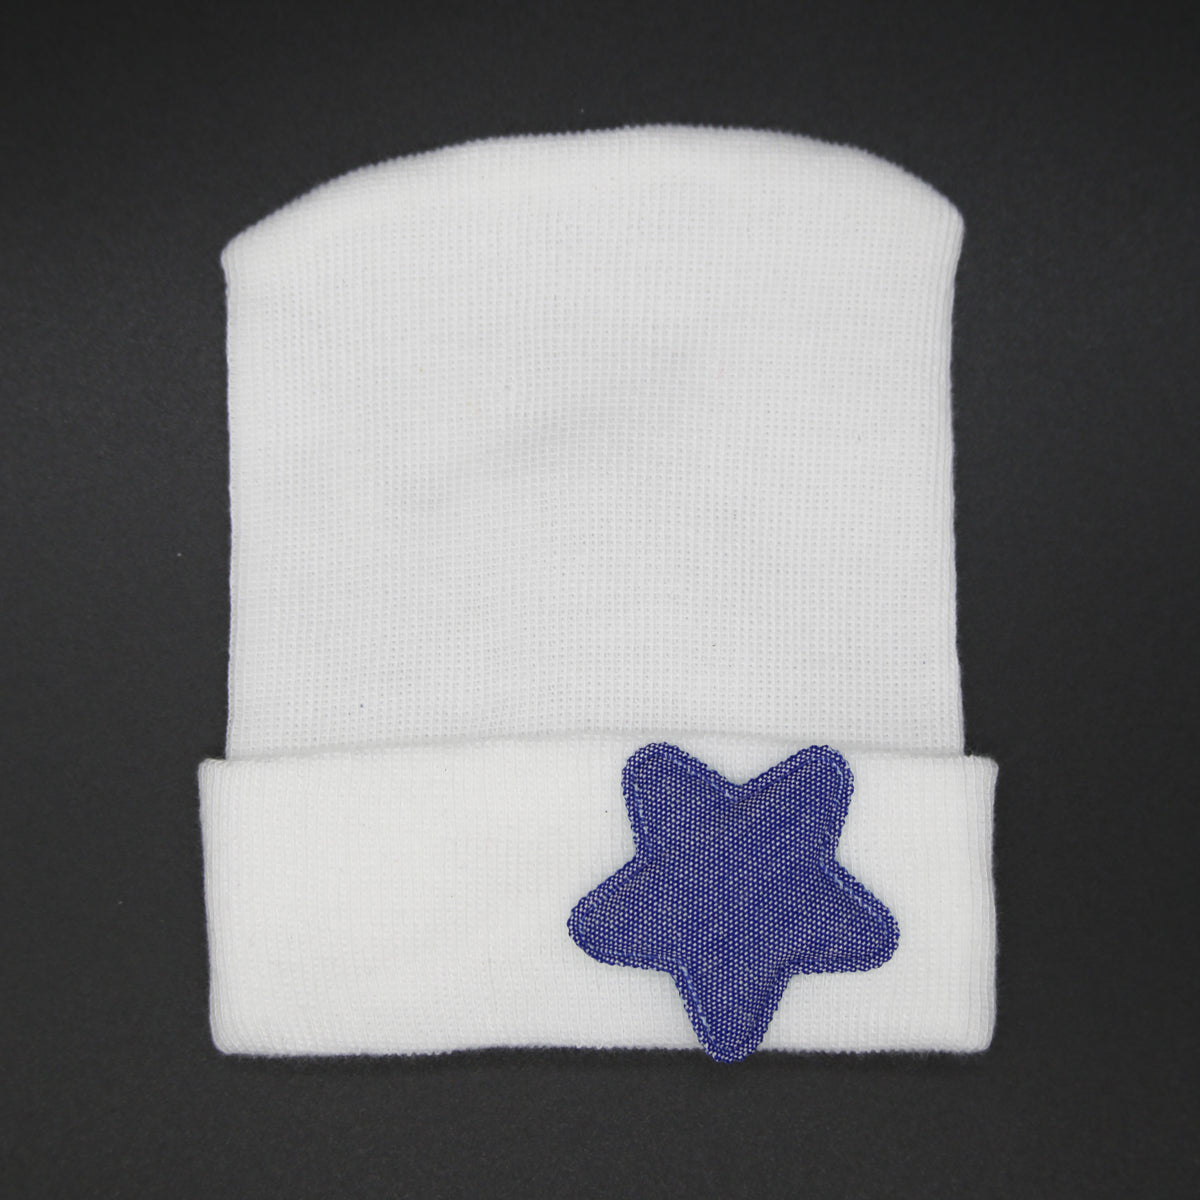 Denim Star Hospital hats